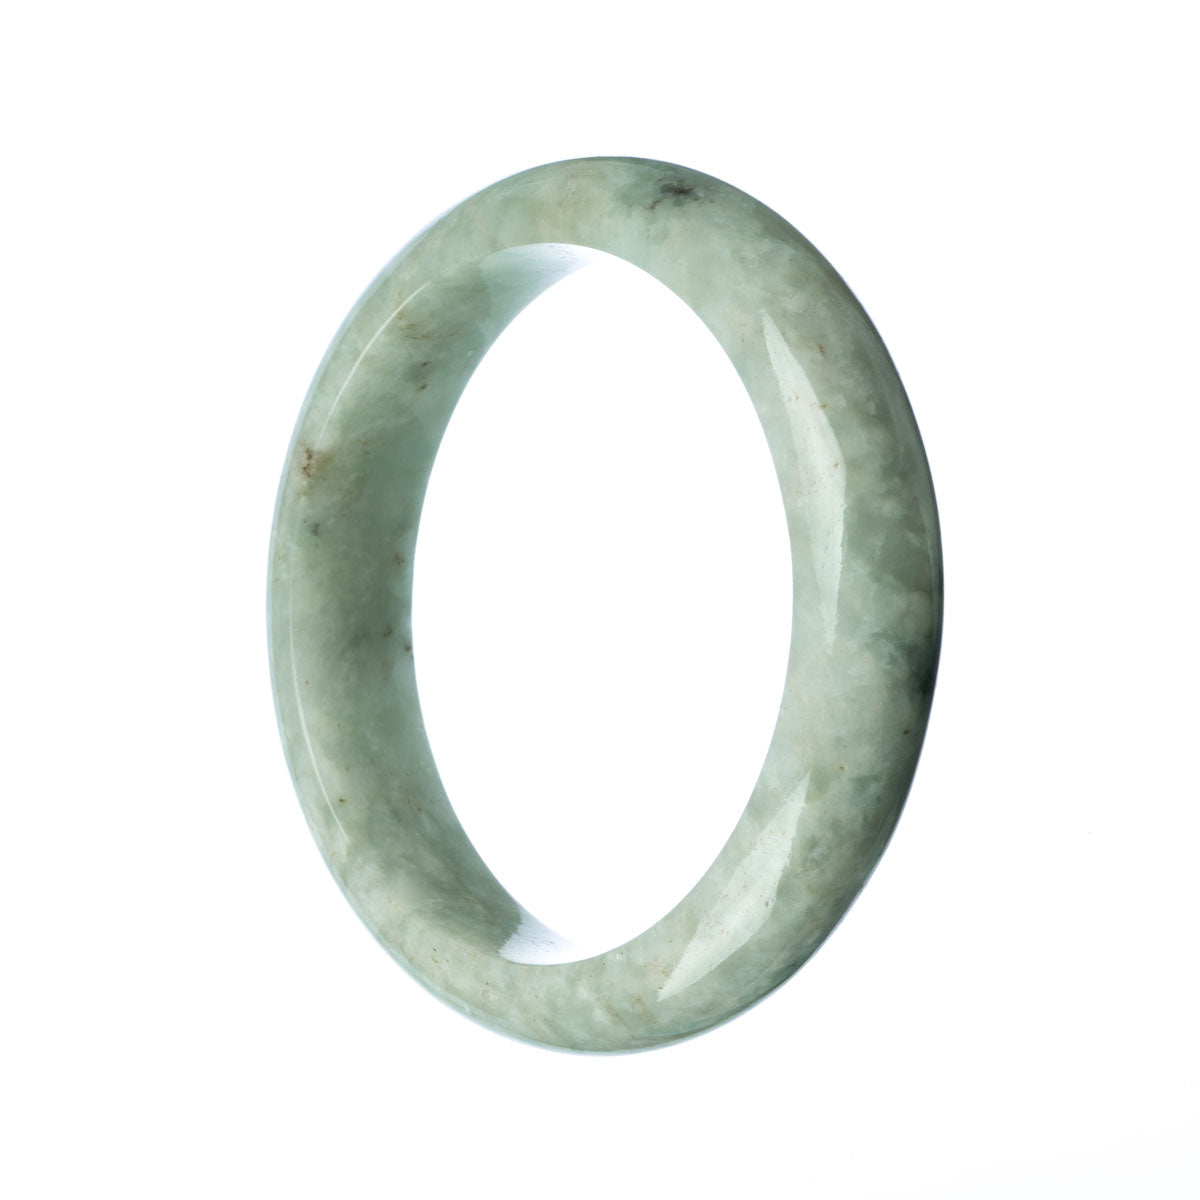 A pale green jade bracelet in a half moon shape, measuring 63mm. Certified Grade A quality by MAYS GEMS.